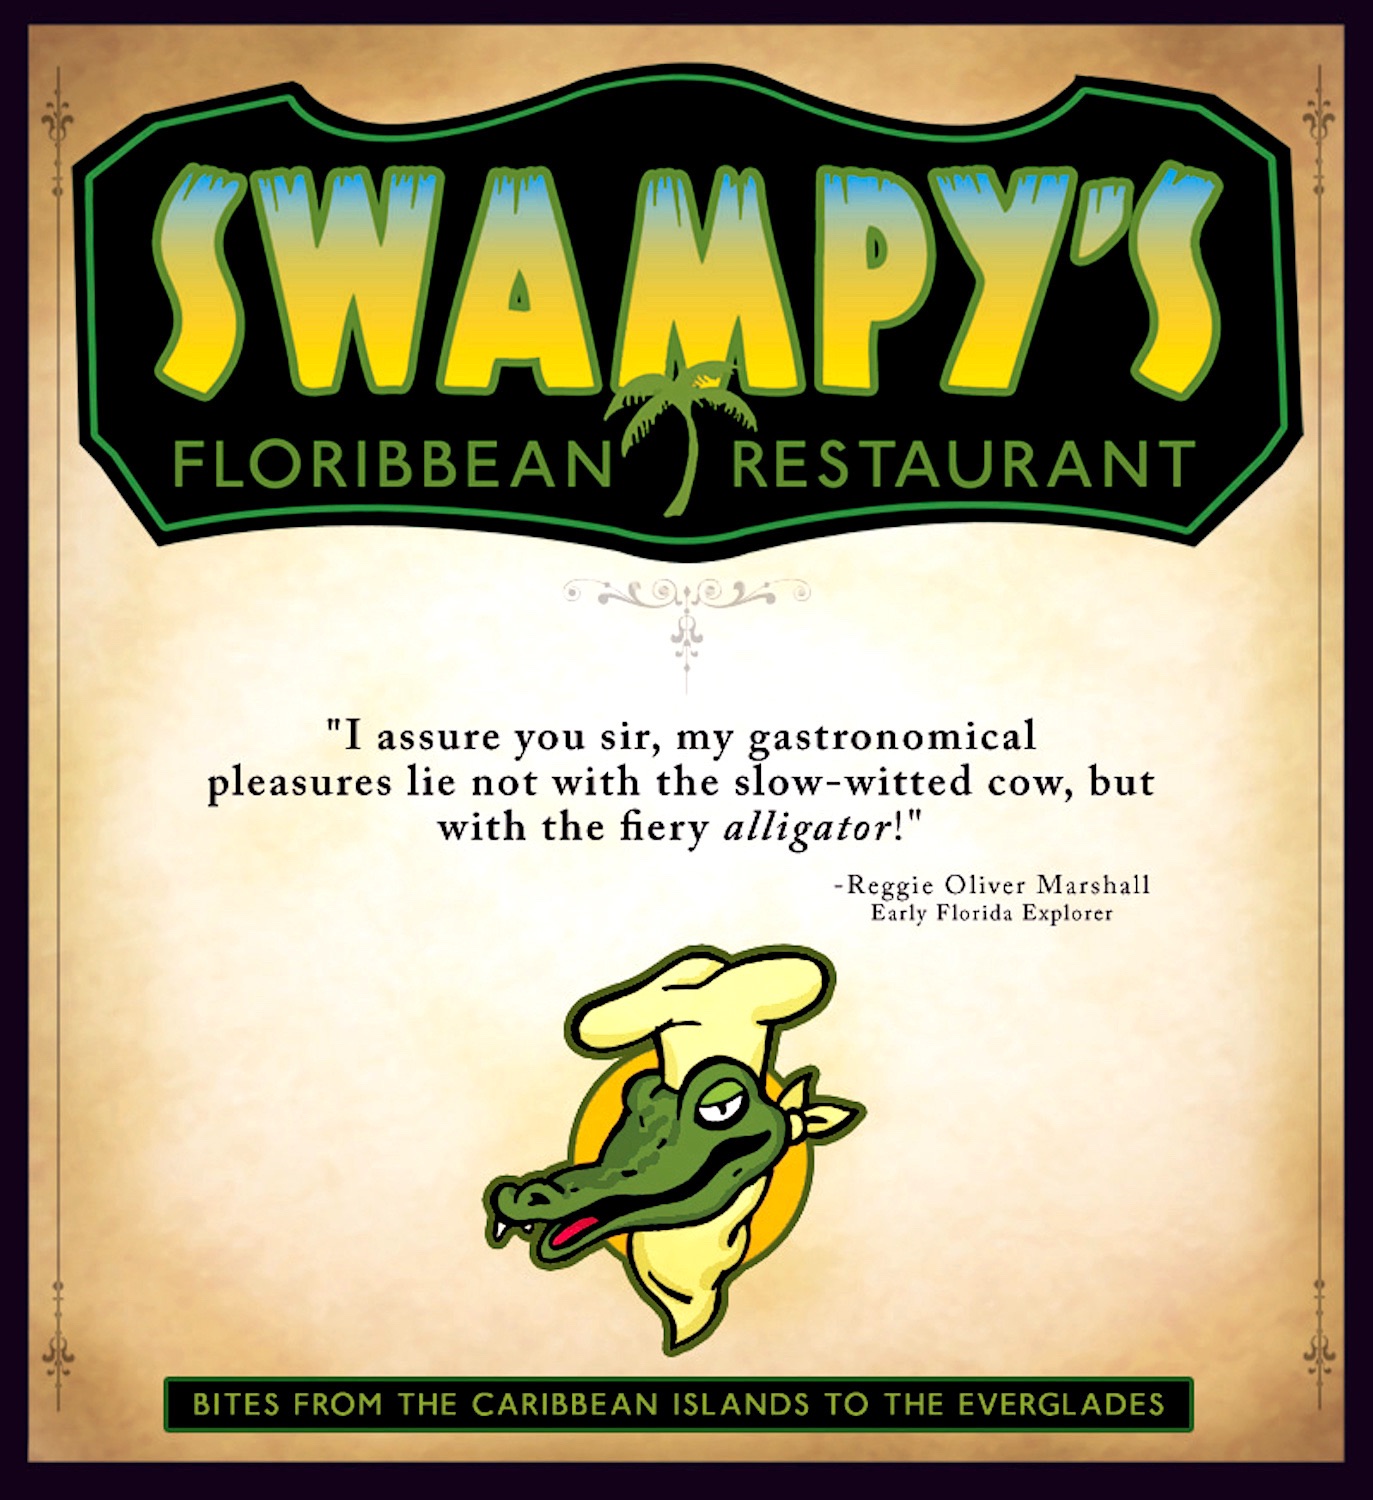 Swampys Floribbean menu11.jpg